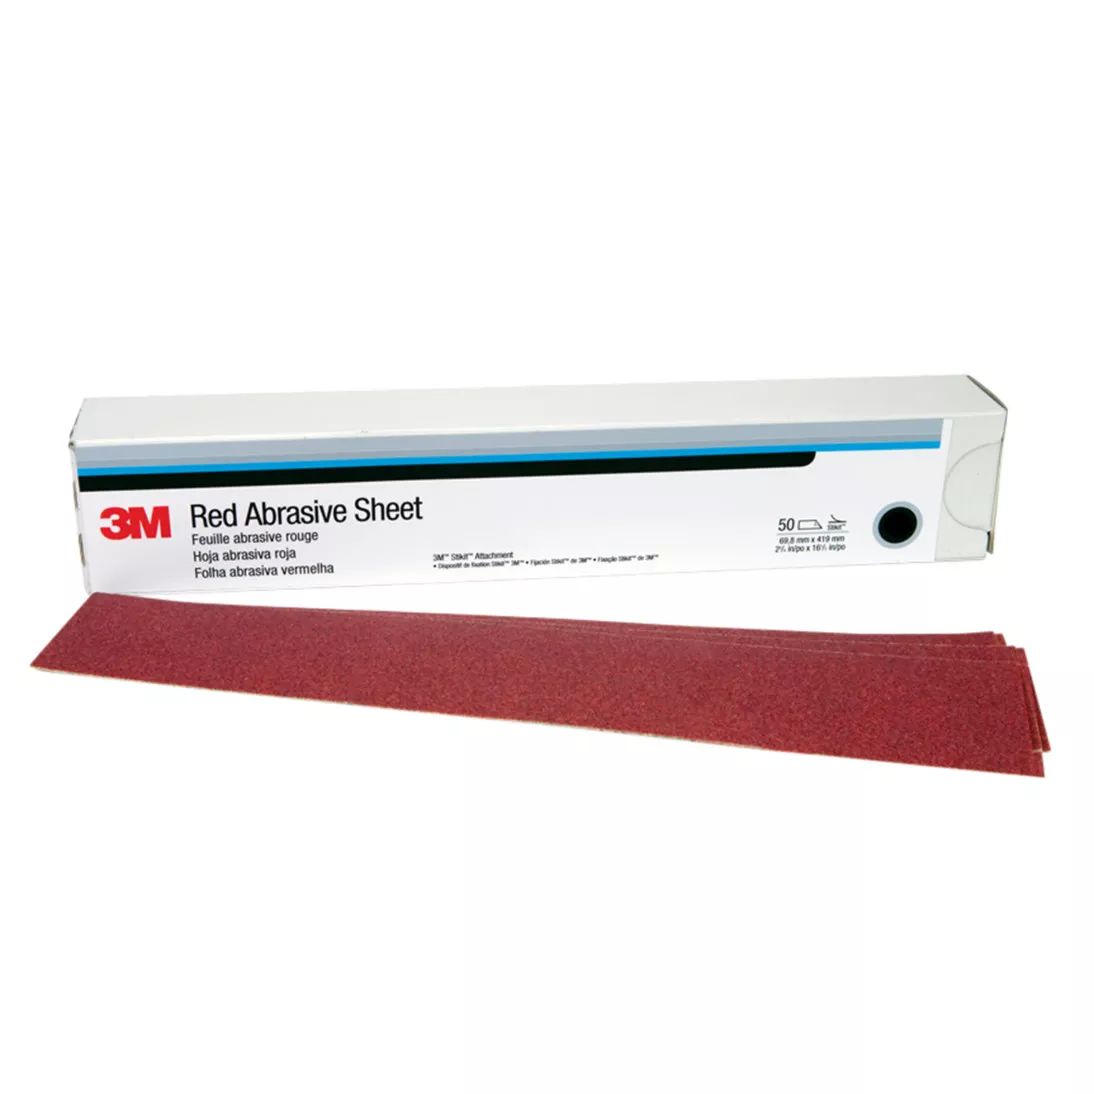 3M™ Hookit™ Red Abrasive Sheet, 01177, P320, 2-3/4 in x 16 1/2 in, 25
sheets per carton, 5 cartons per case